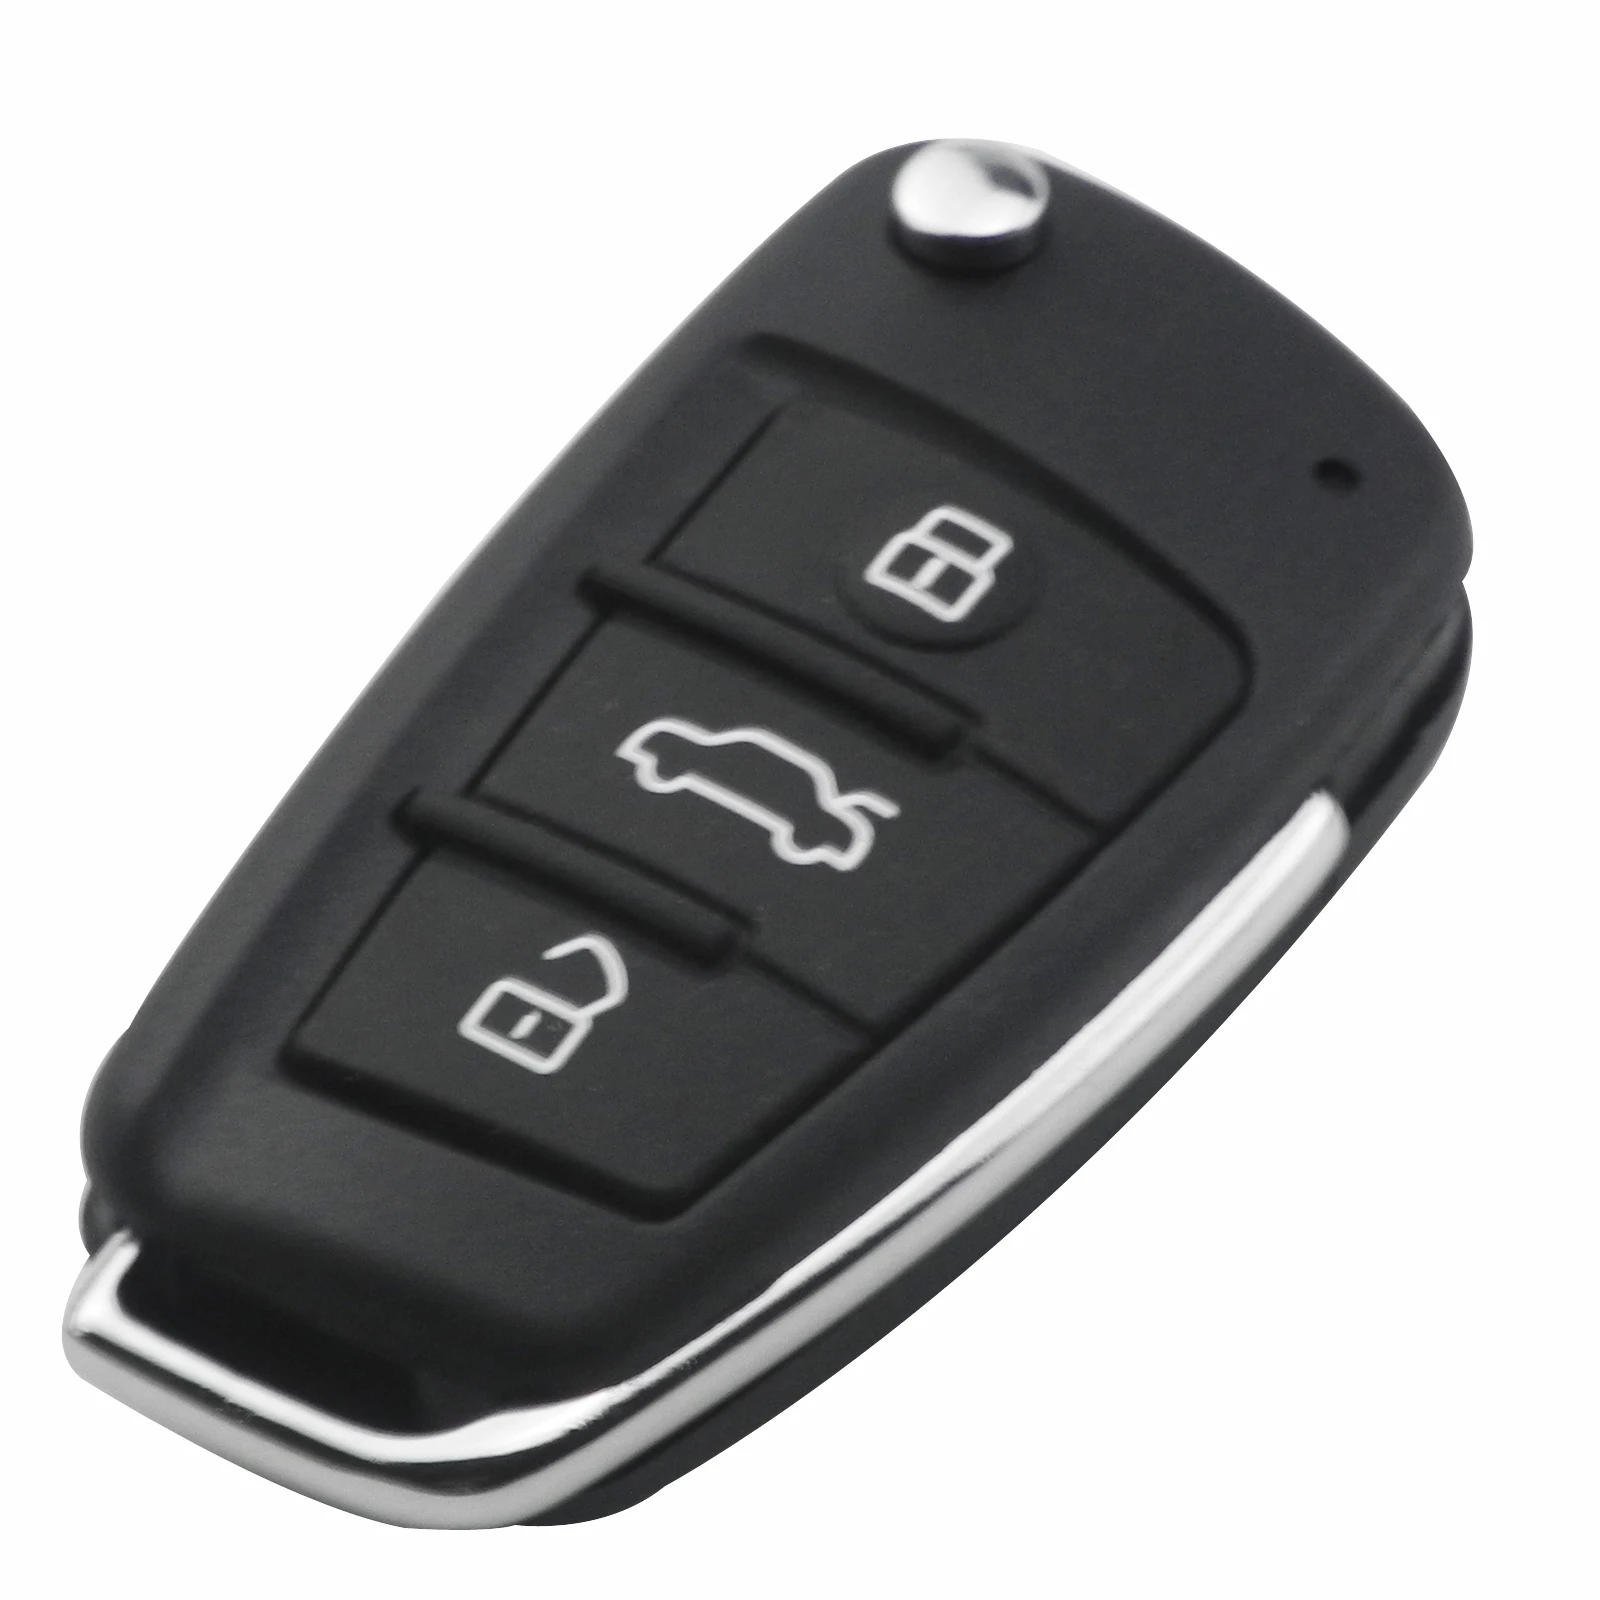 Jingyuqin 3/4 кнопки раскладная откидная оболочка ключа дистанционного управления брелок для Audi A6L Q7 A2 A3 A4 A6 A6L A8 TT 2008 2009 2010 2011 Fob чехол - Количество кнопок: 3 Кнопки